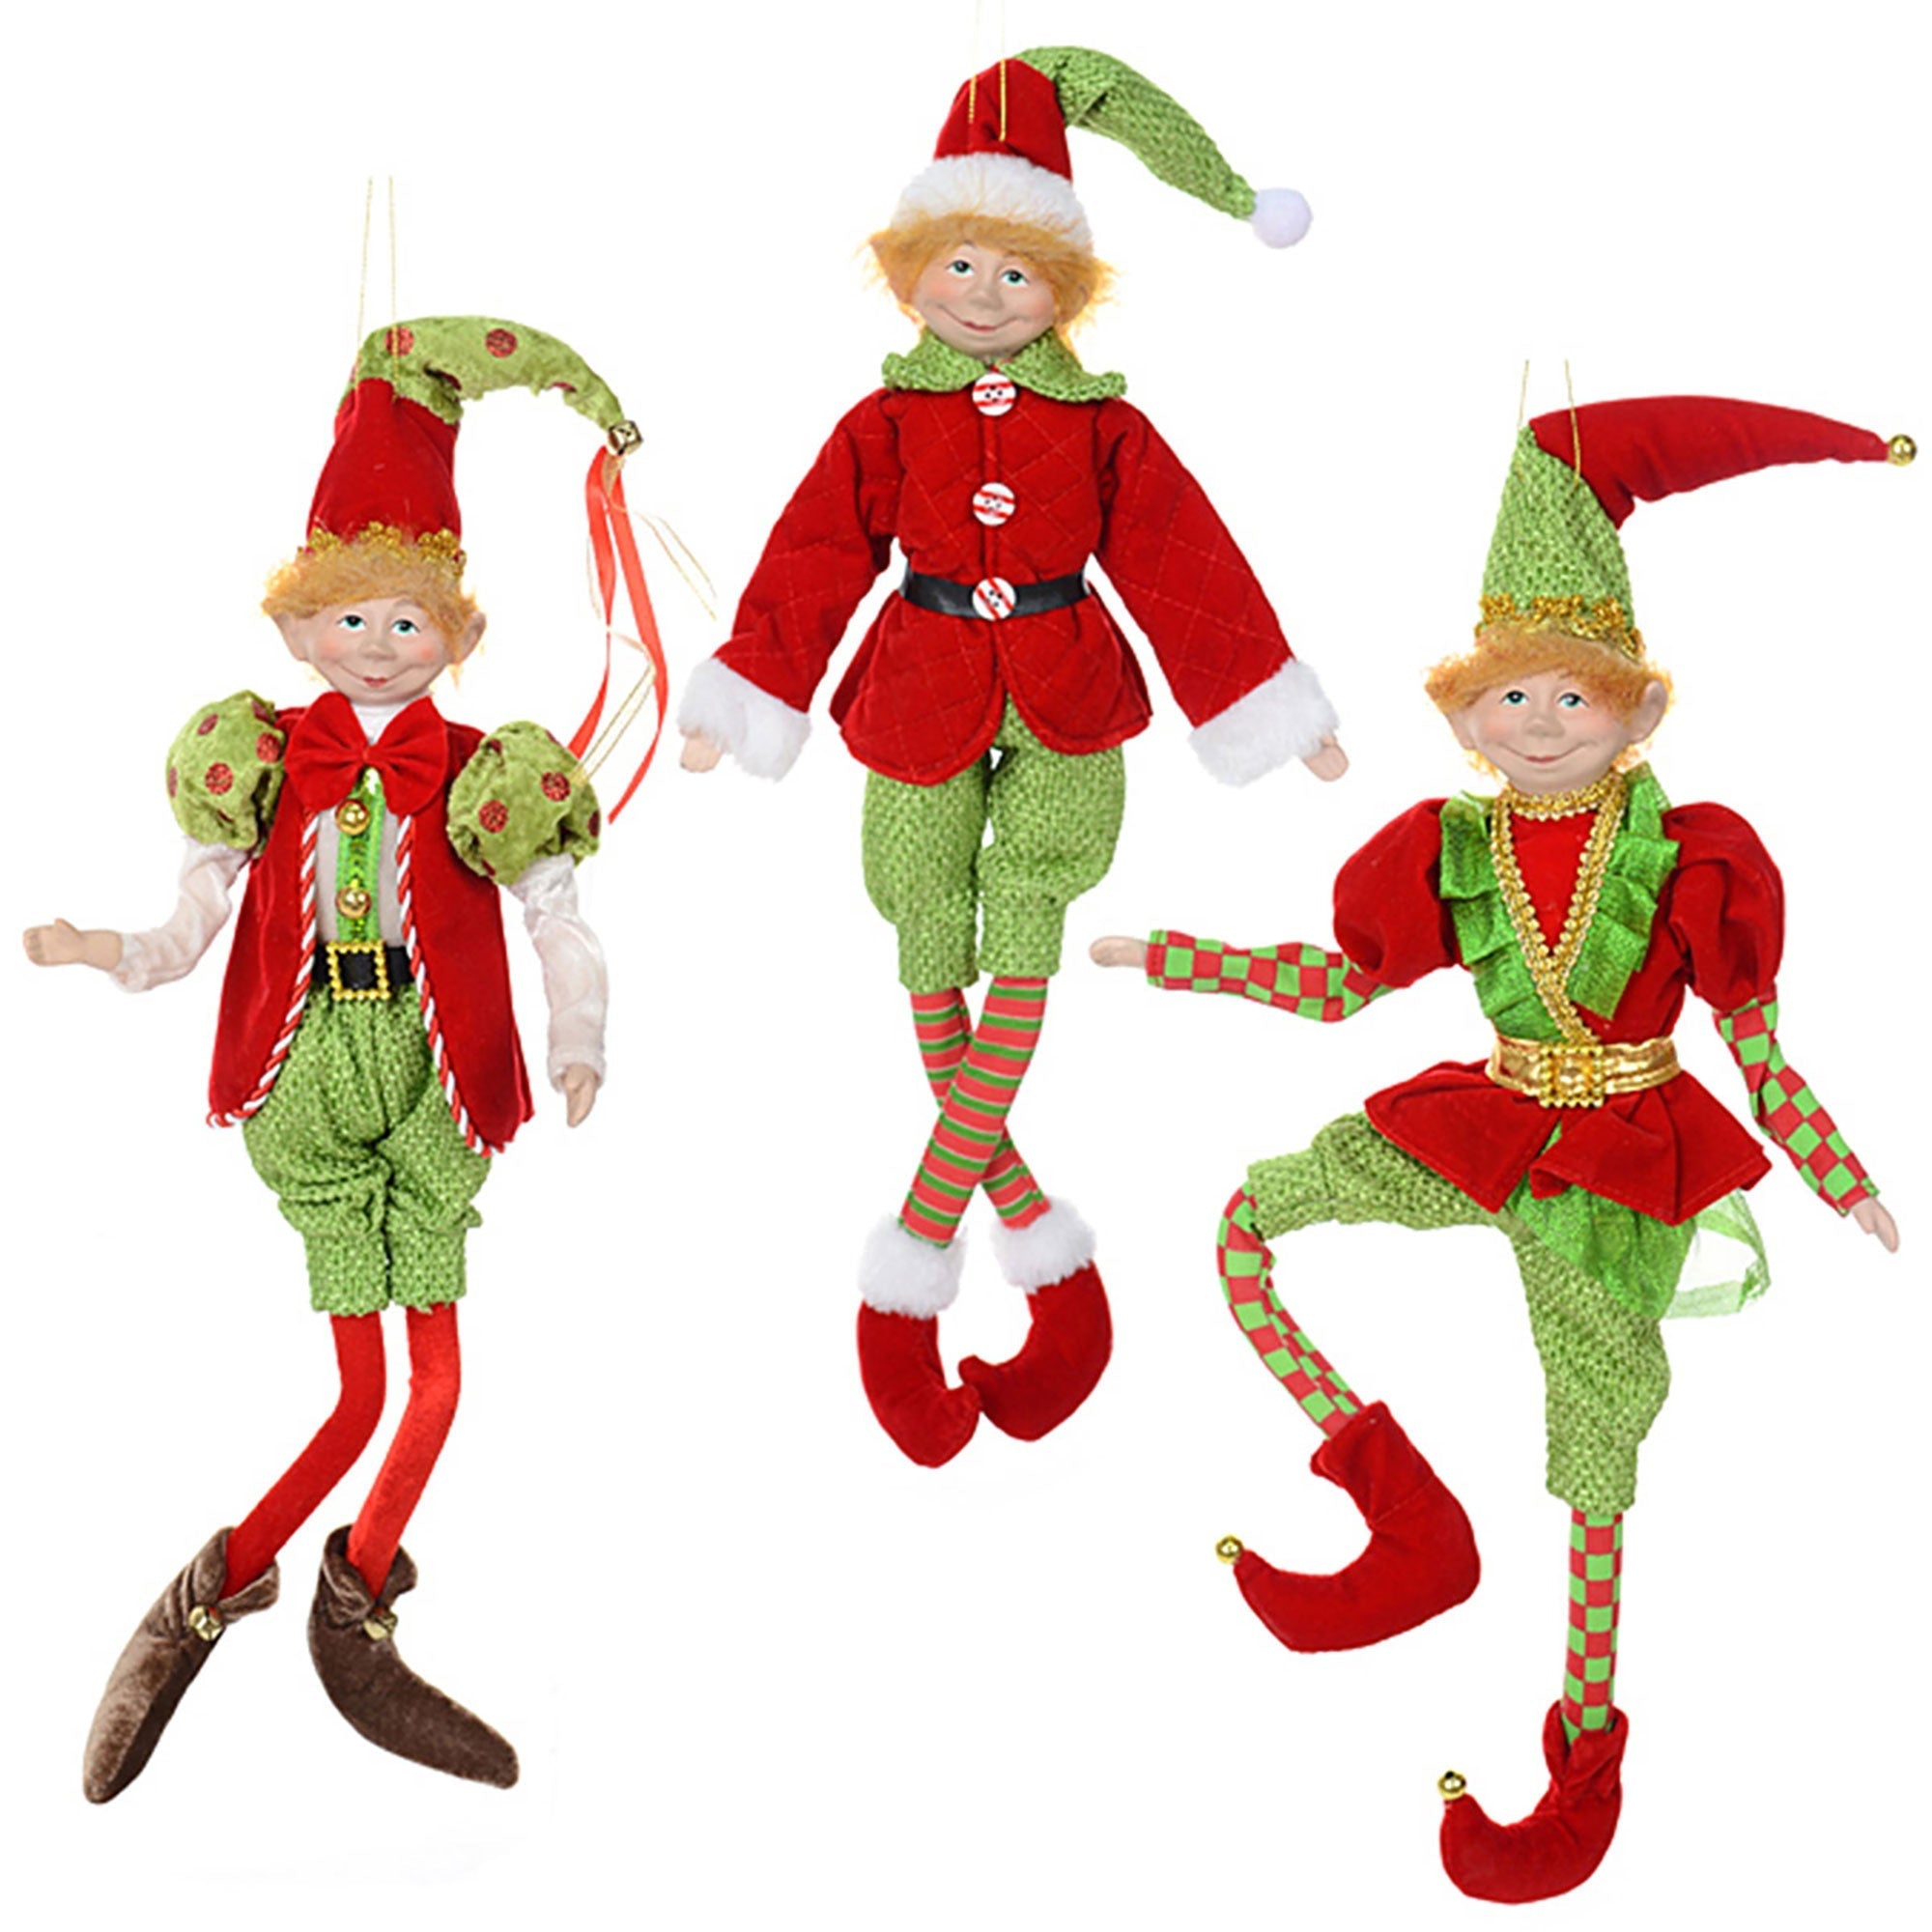 Flexible Elf, 21 Inches, Assortment, 1 Count